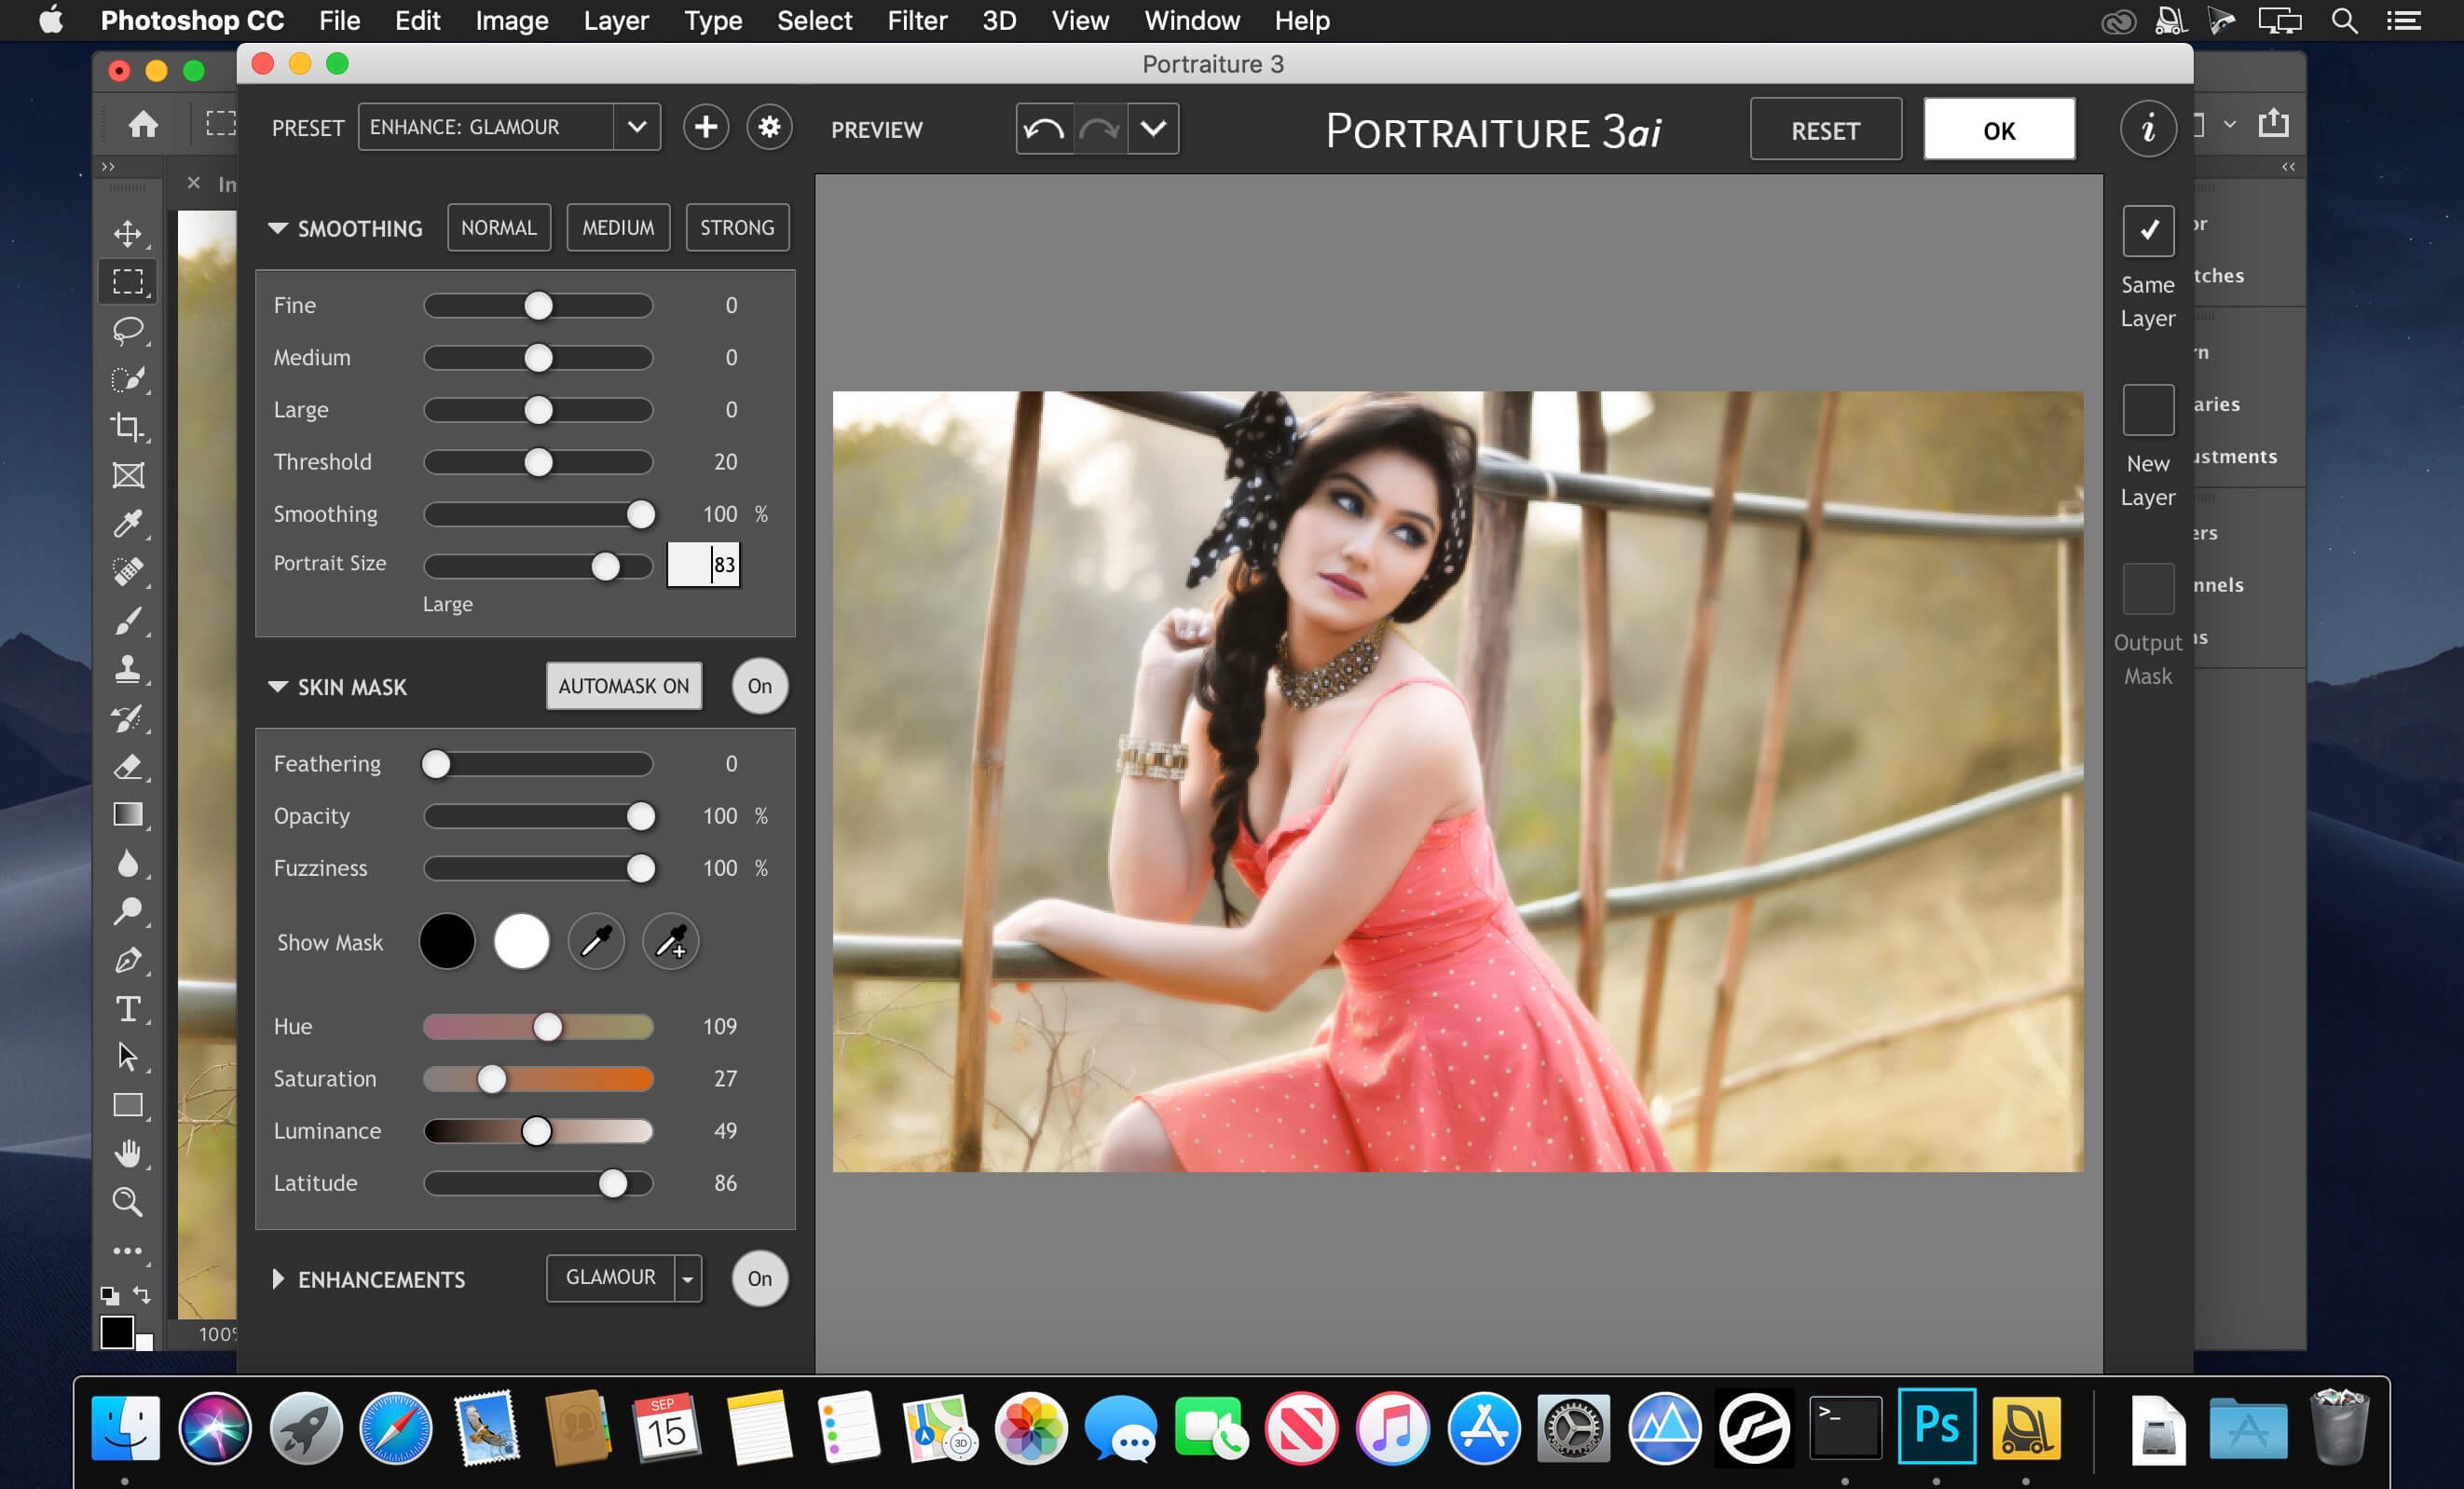 photoshop cc 2015 (64-bit) for mac